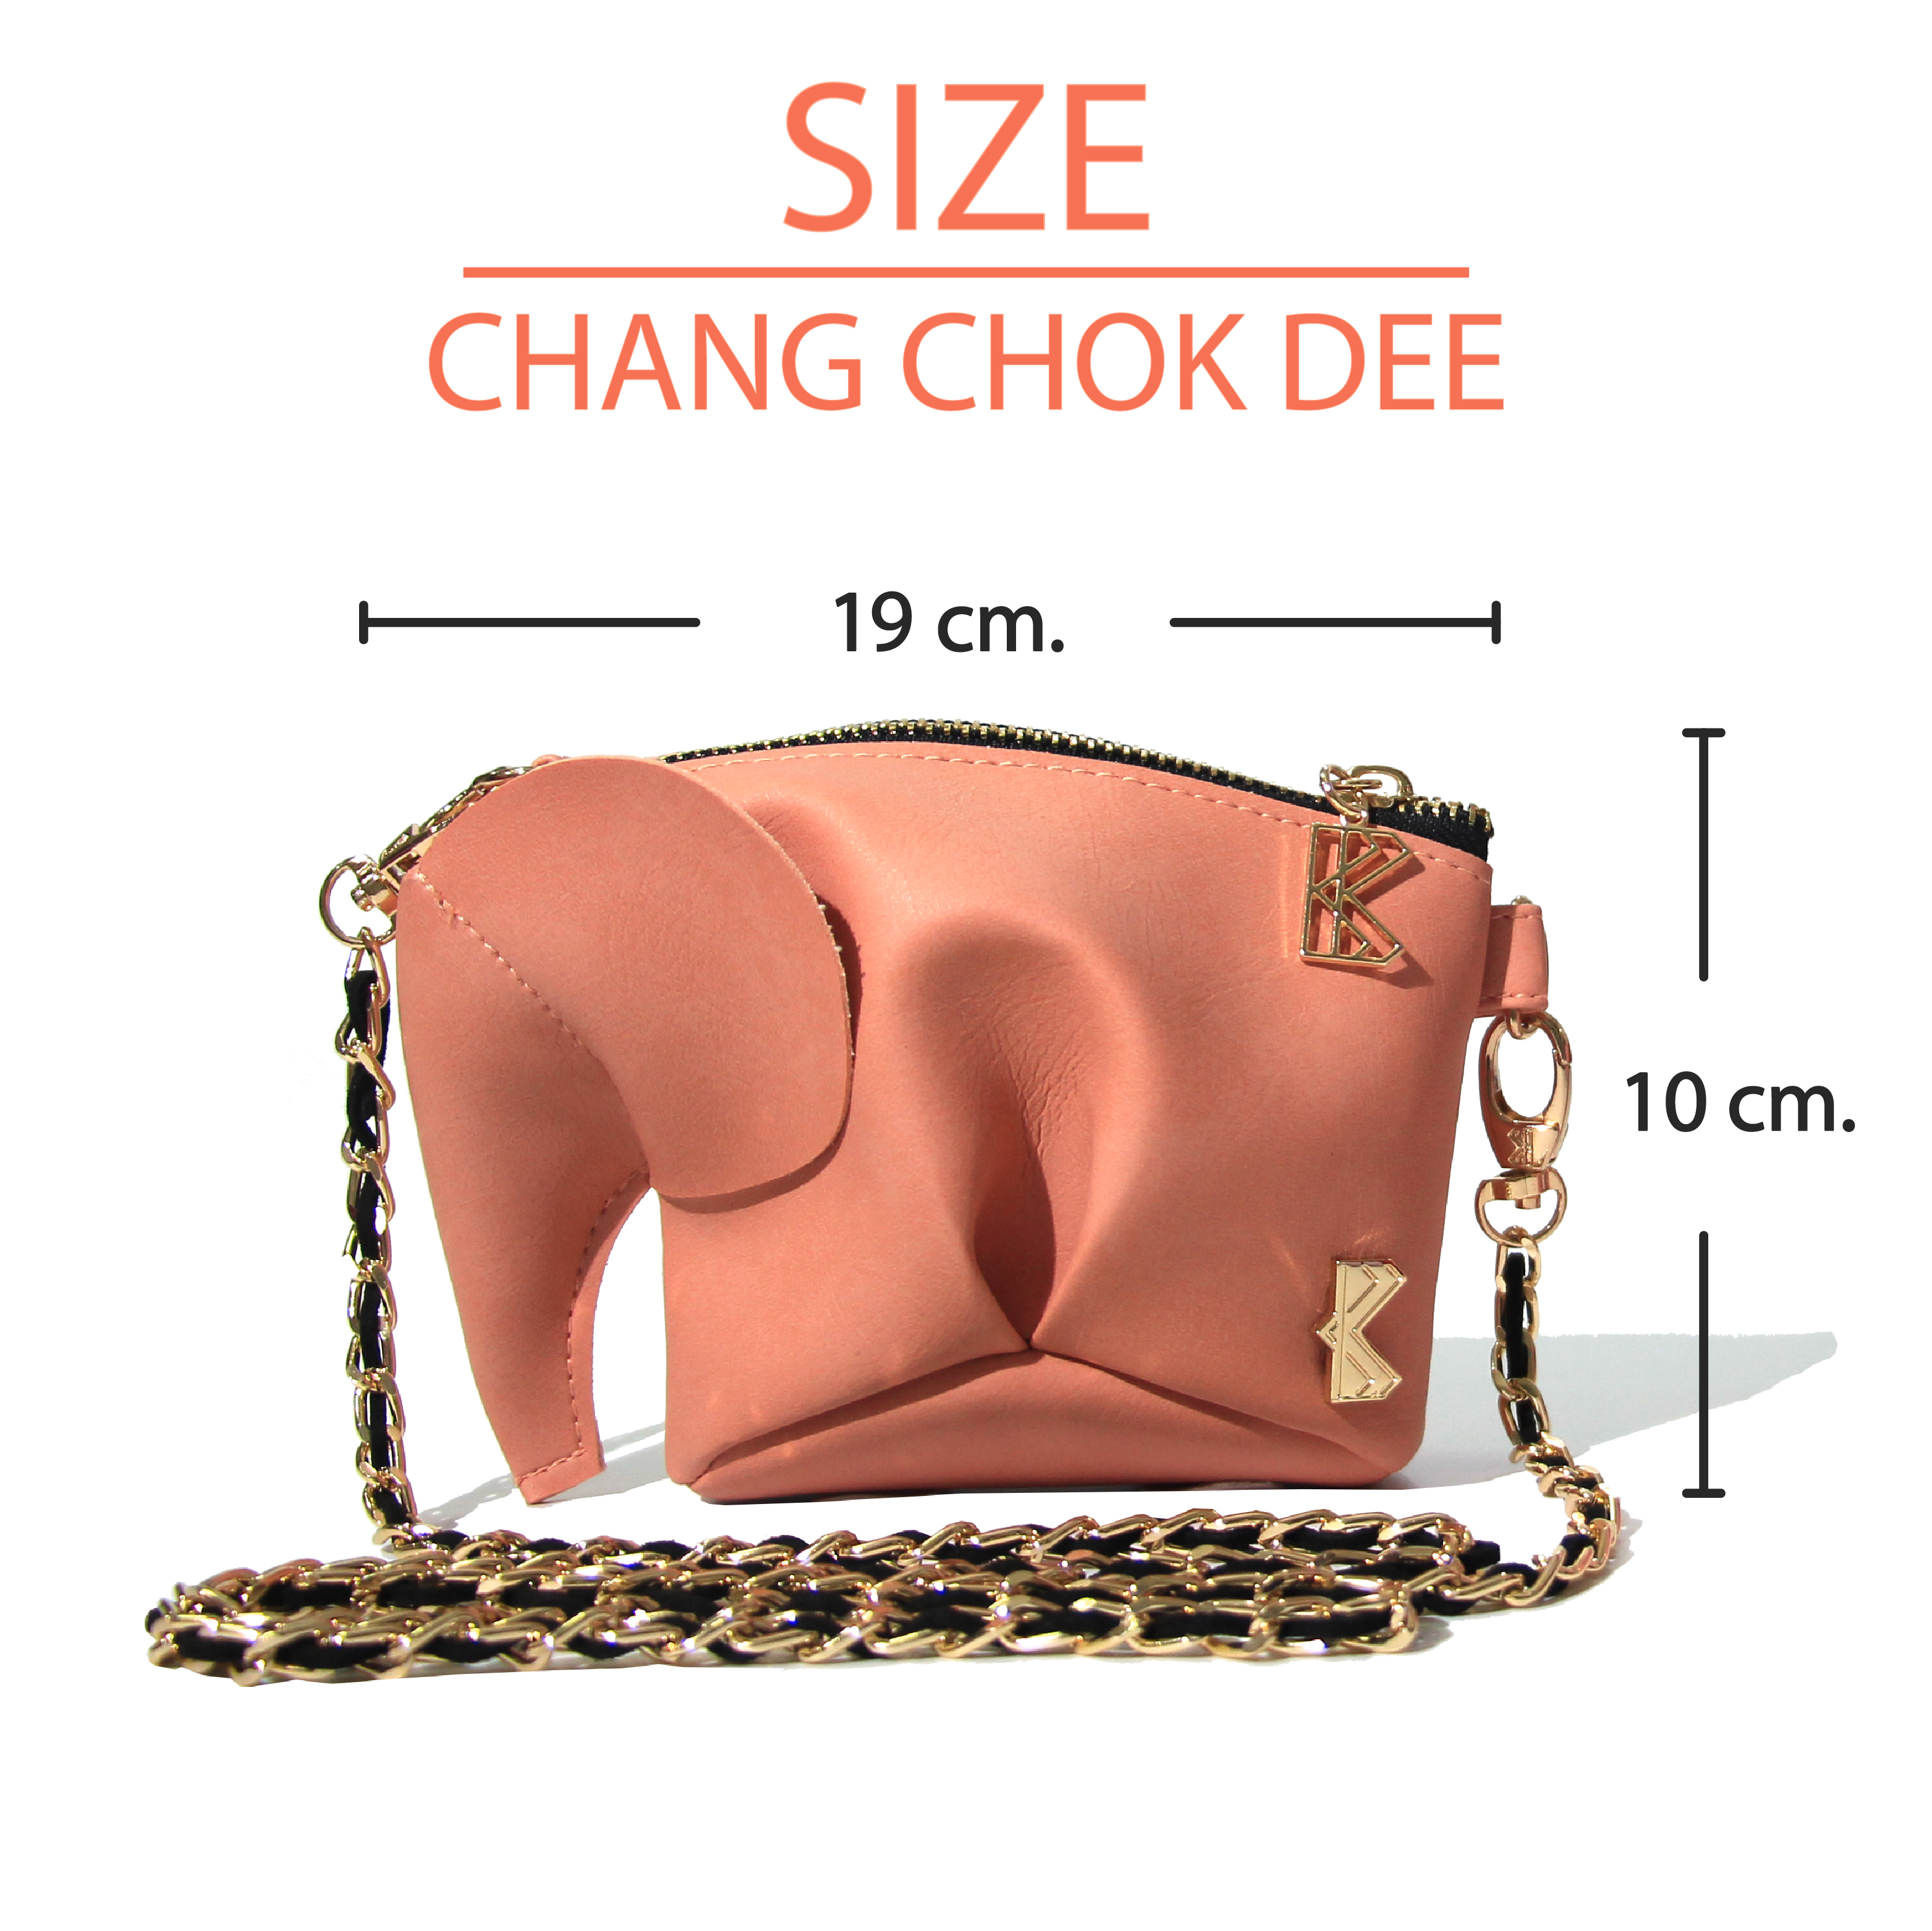  Chang Chokdee